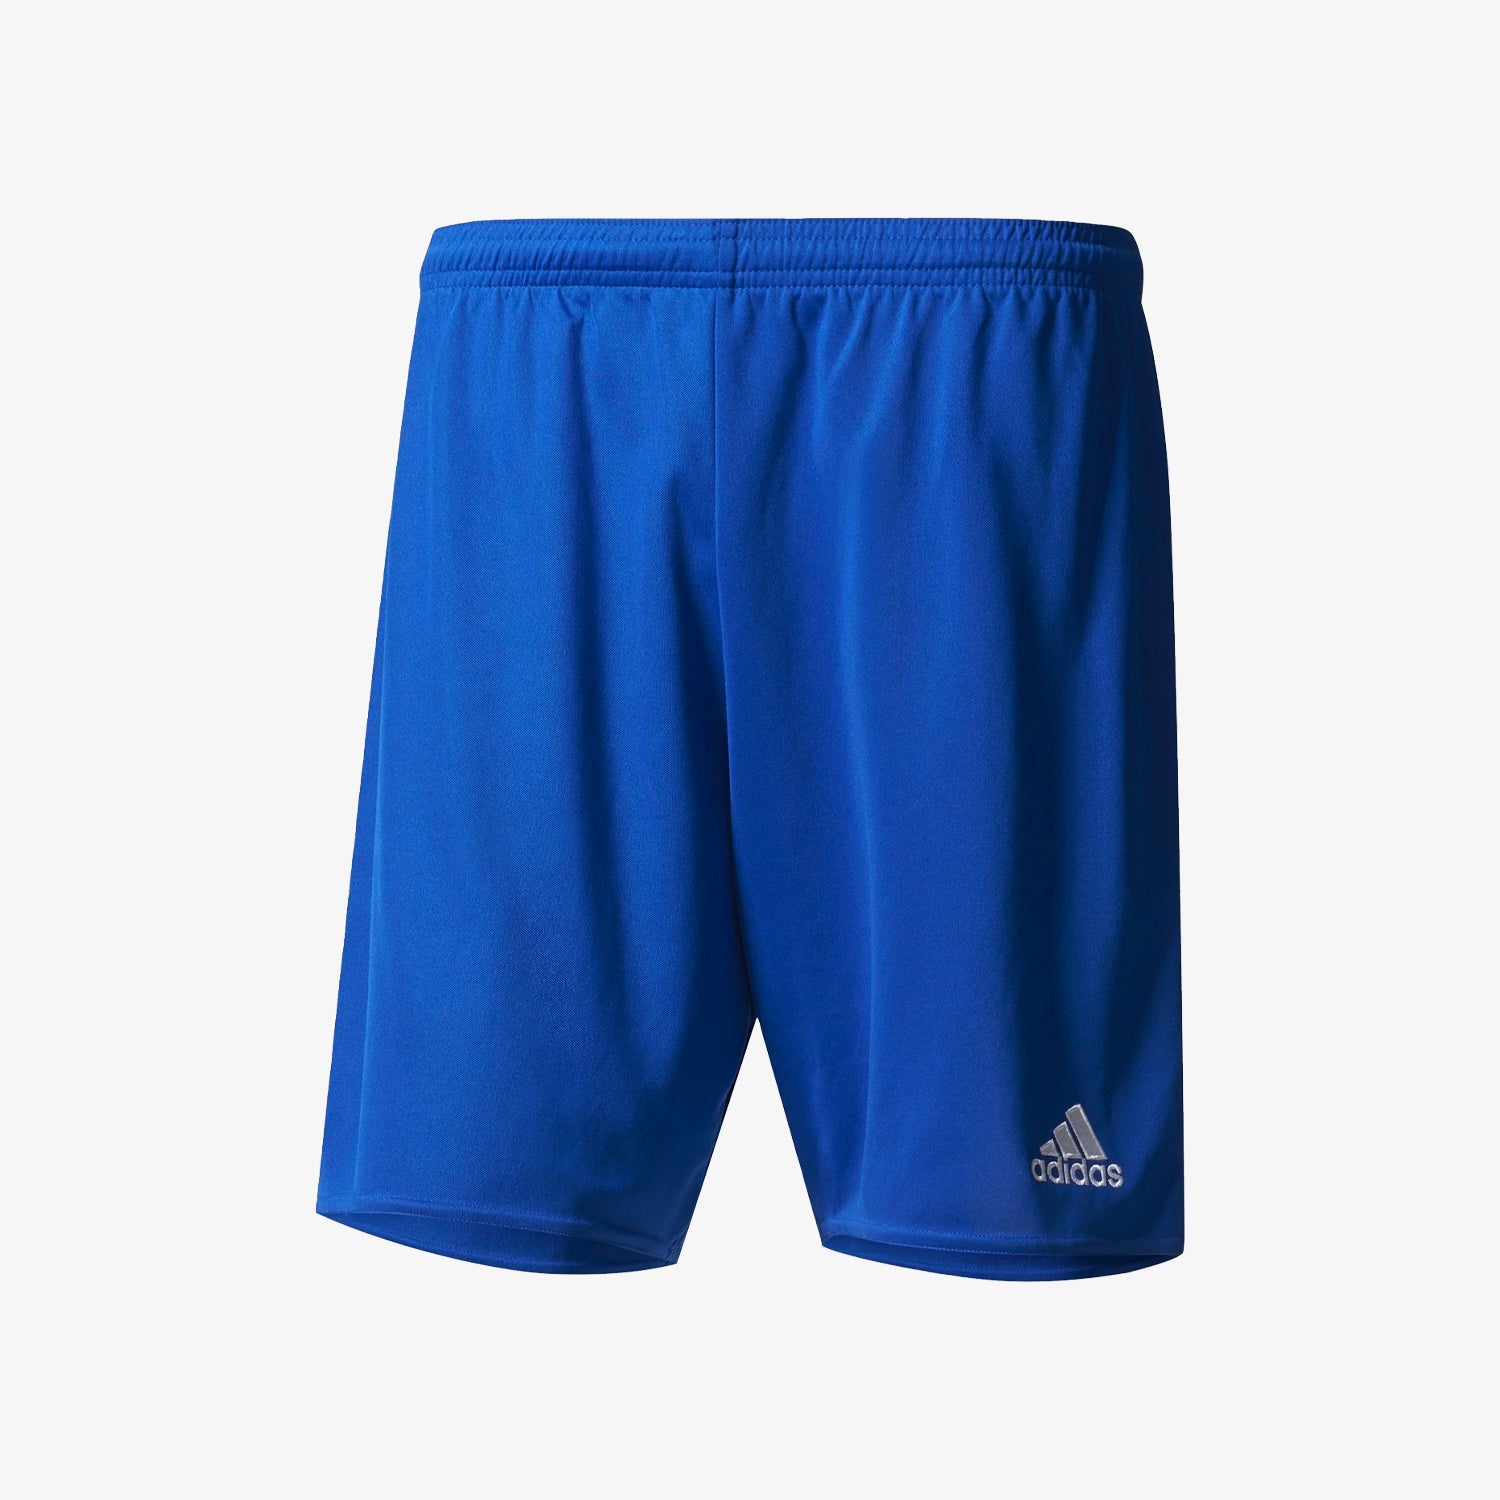 Kid's Parma 16 Shorts - Navy Blue/White